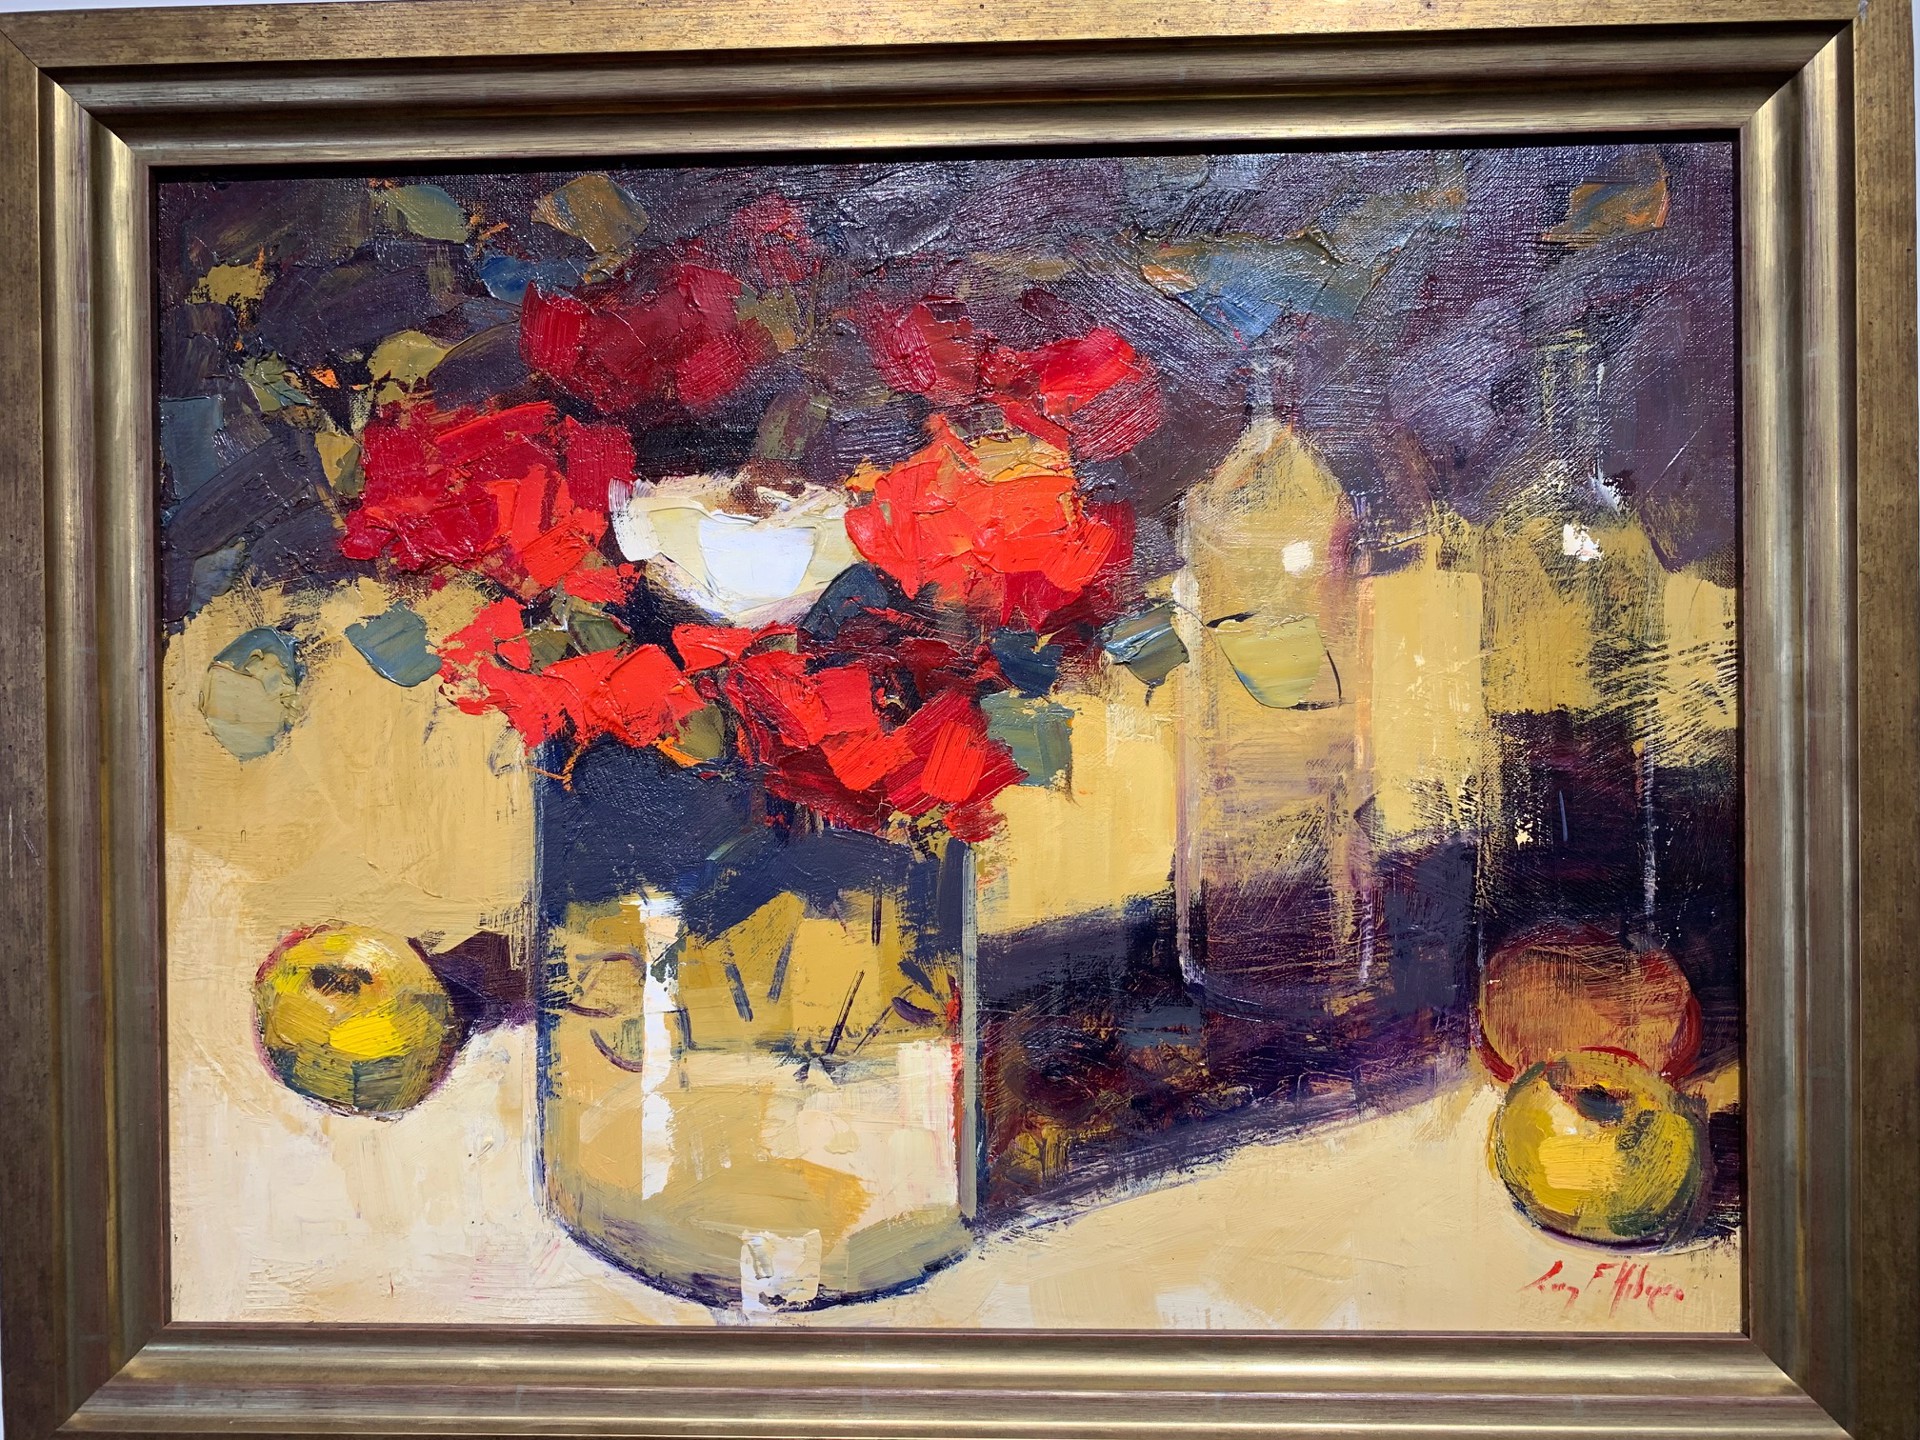 Vase, Bottles, and Apples by Luis F. Hebrero